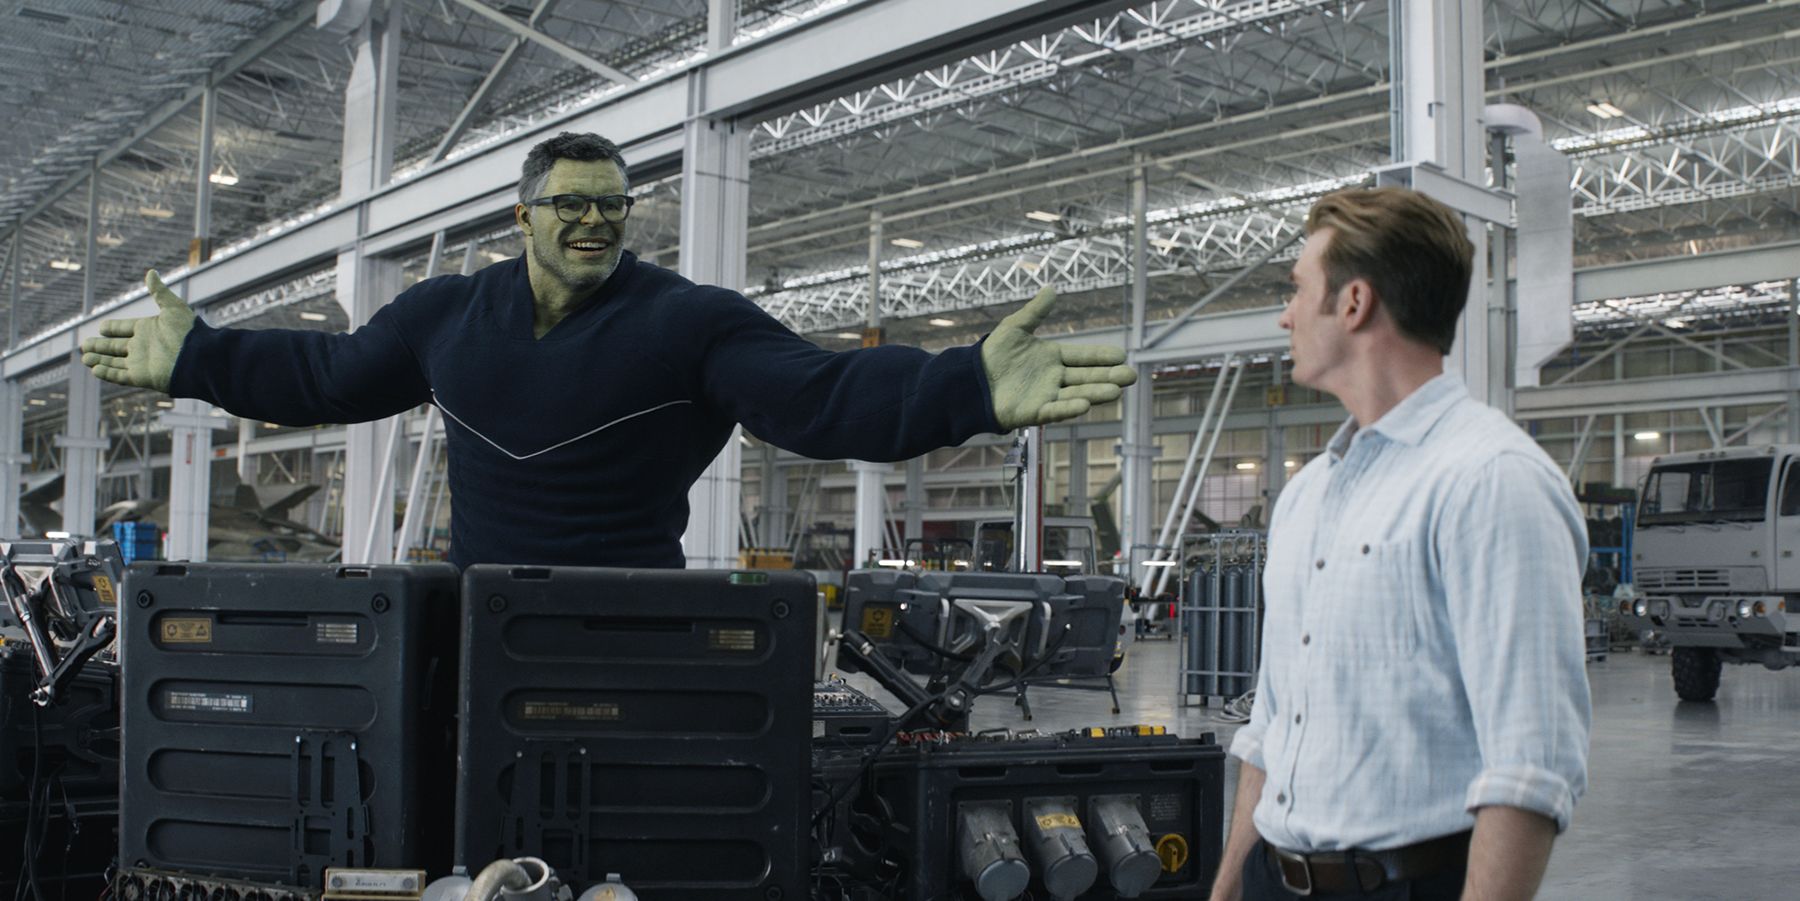 Professor Hulk is Marvels Version of Silver Age Superman